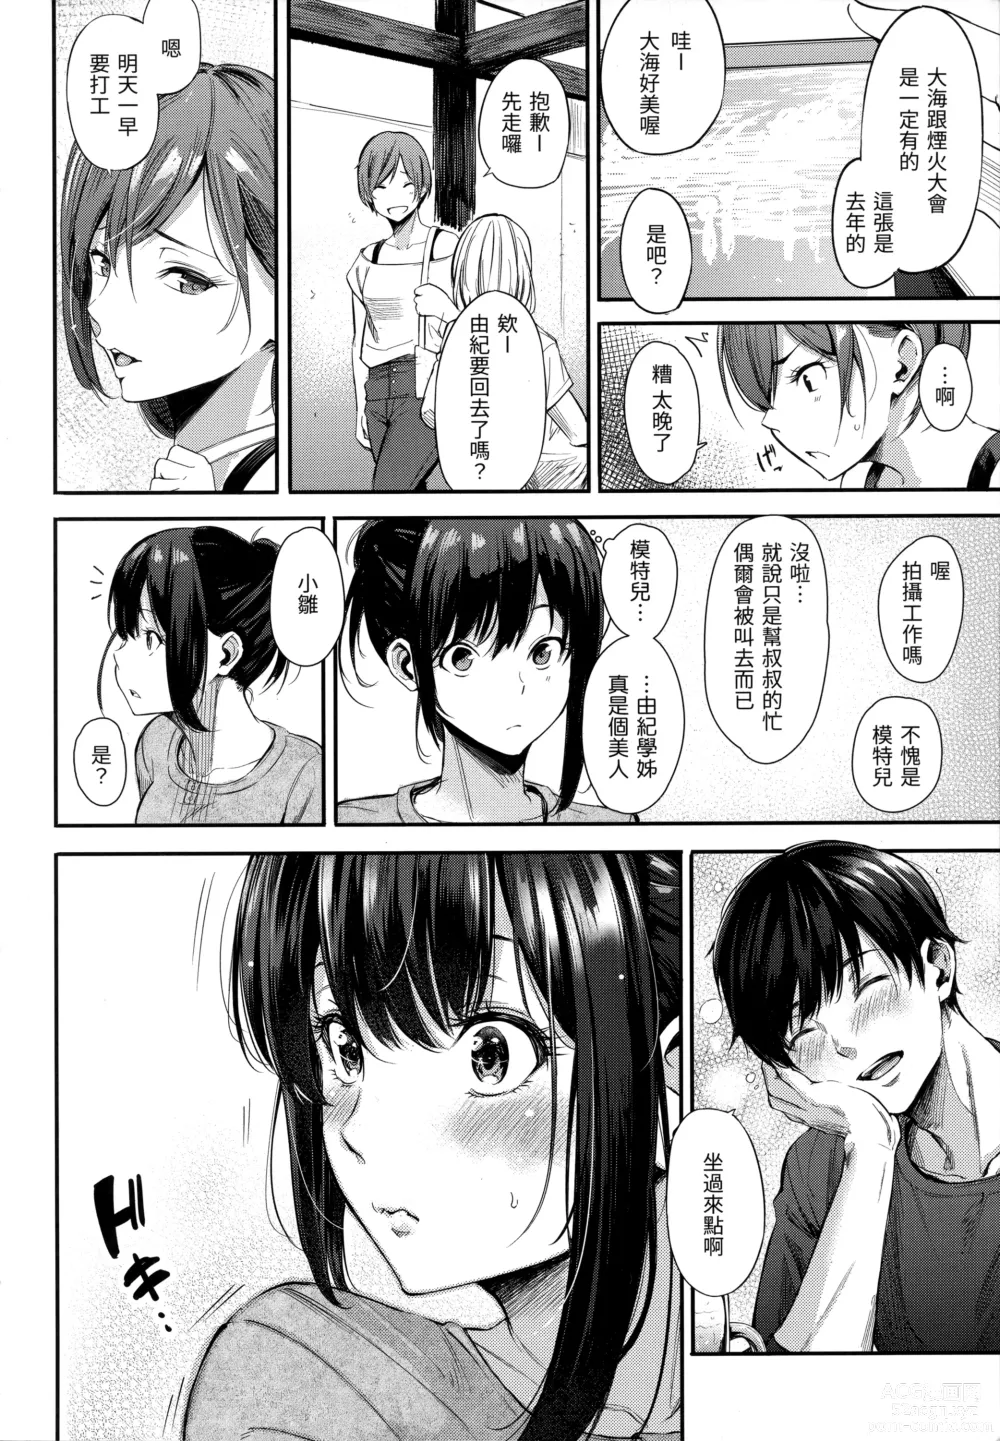 Page 8 of manga 祕密x祕密 (uncensored)